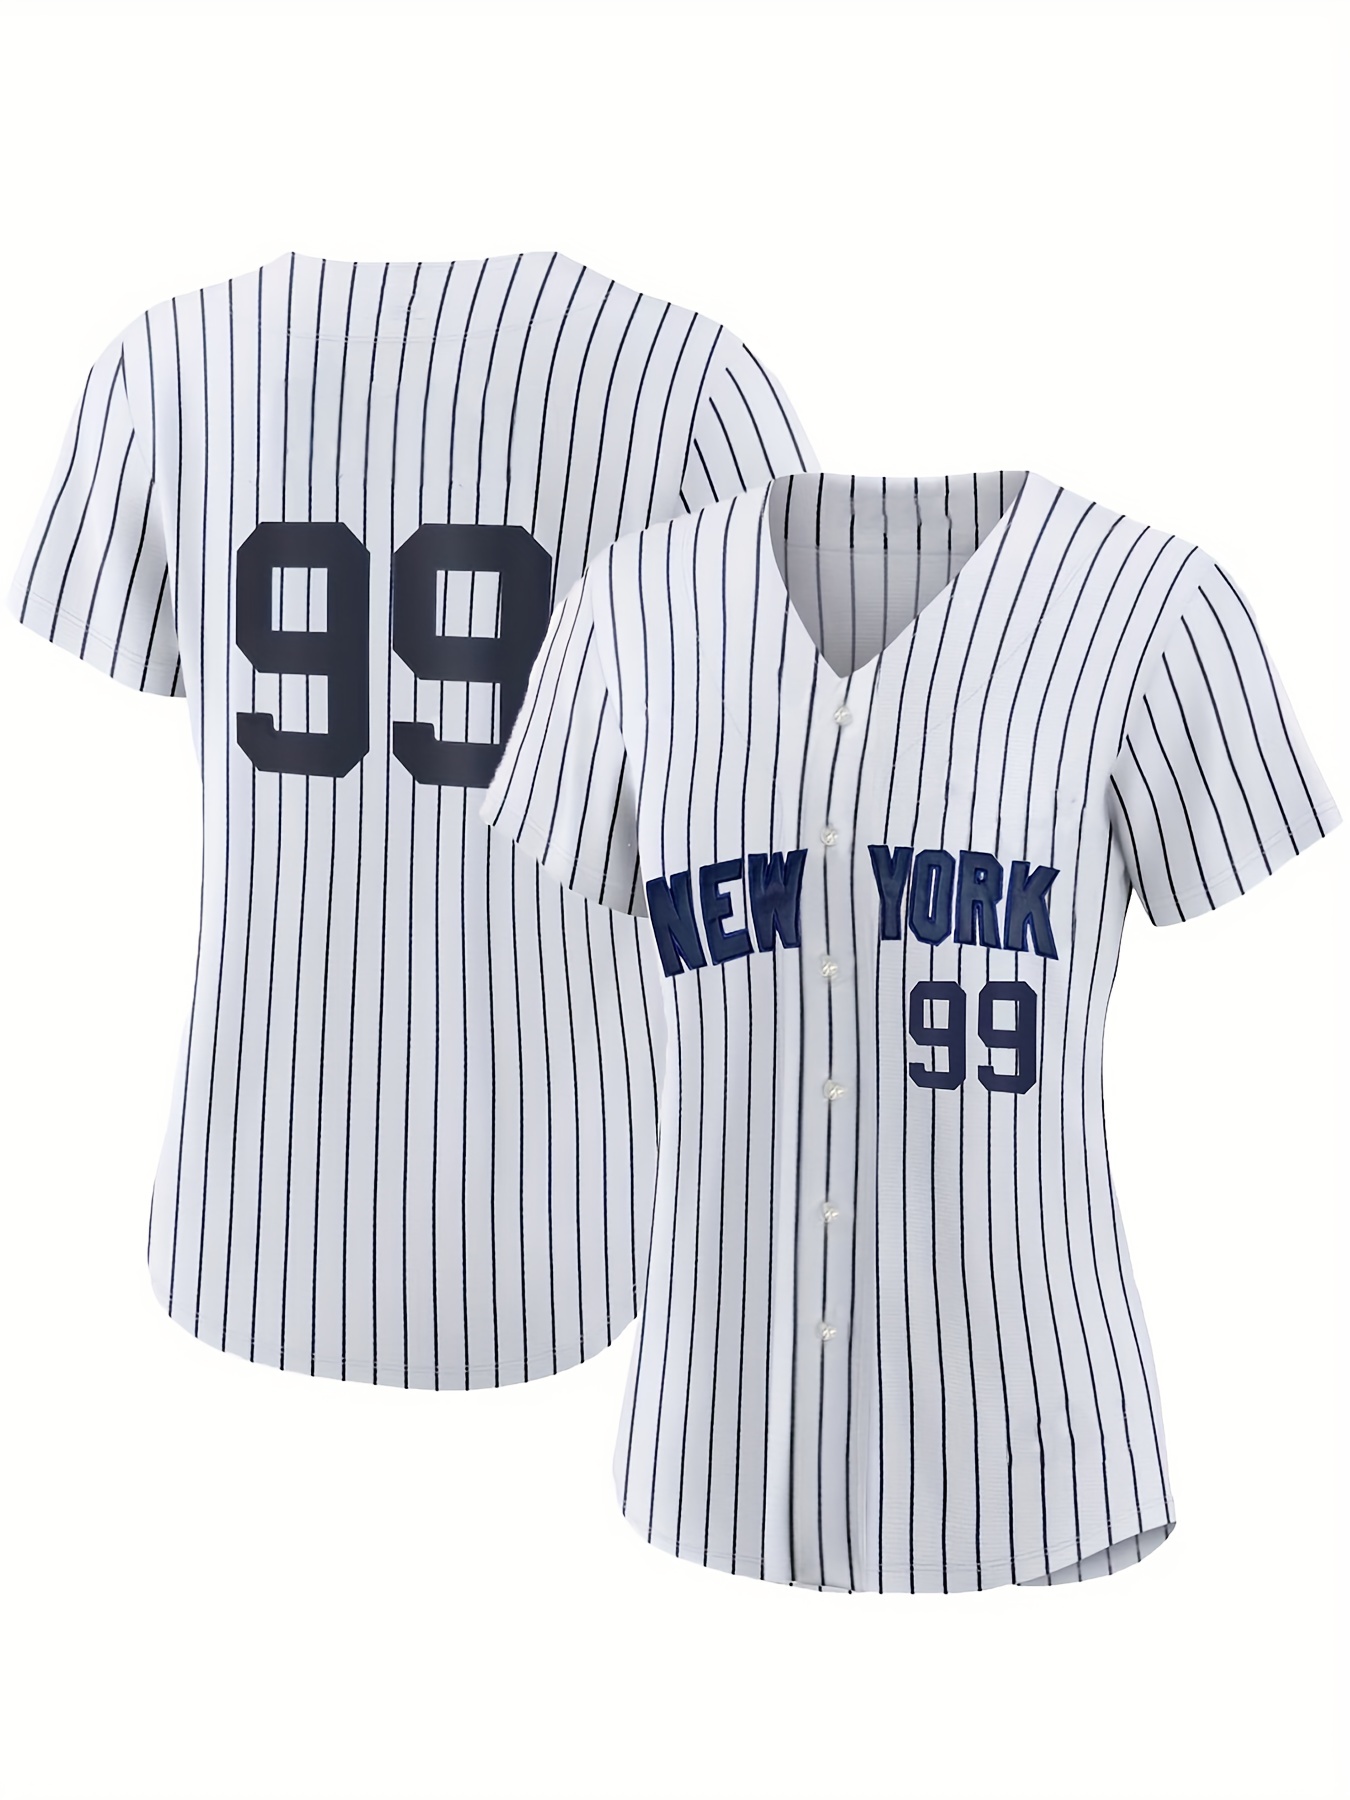  Womens Yankees V-Neck T-Shirt : Sports & Outdoors